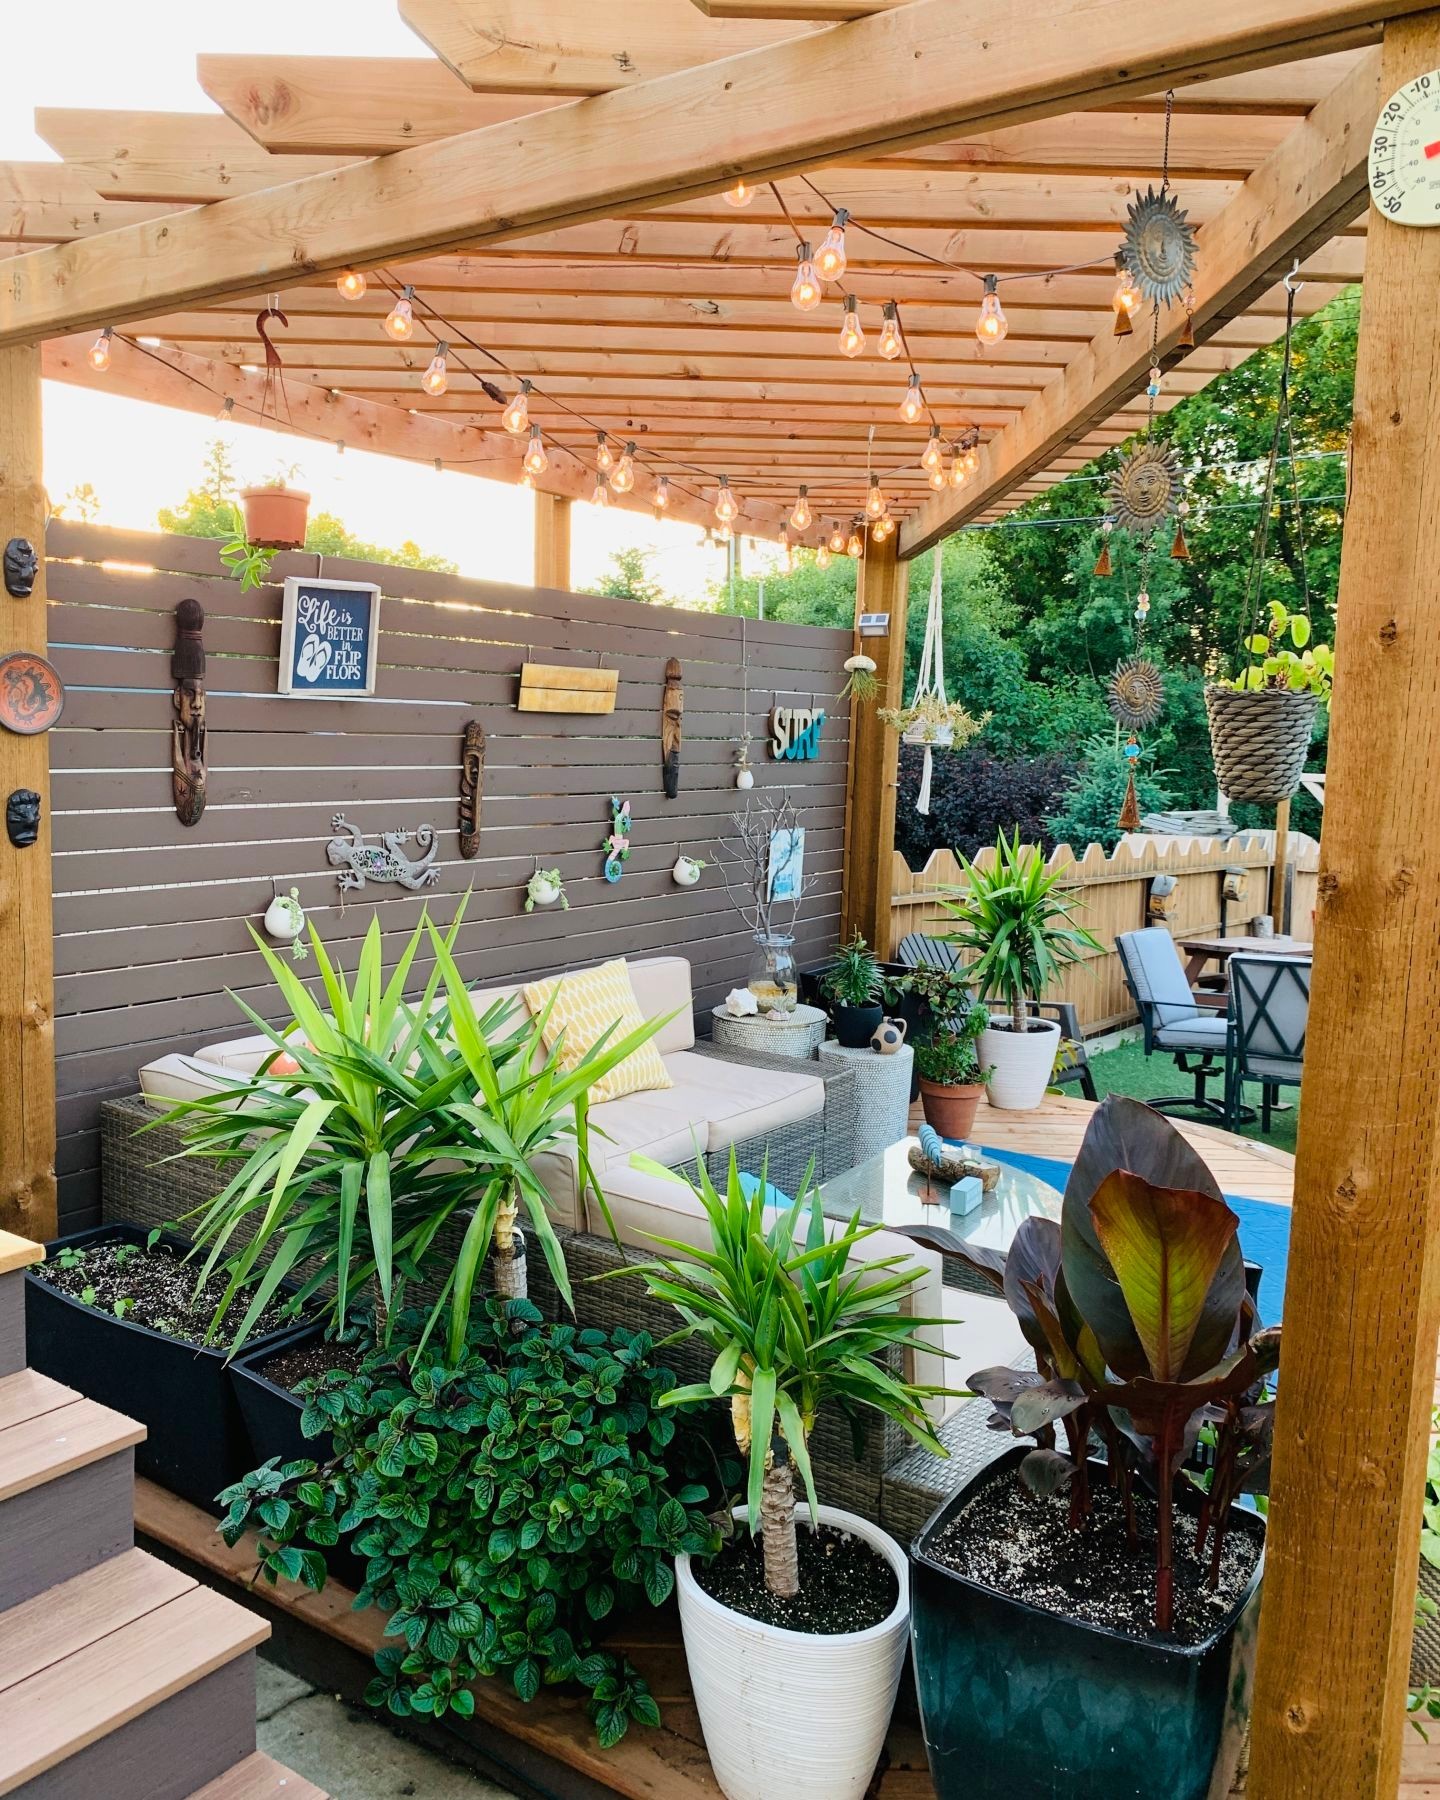 Backyard pergola for shade. Photo by @contact_renovations